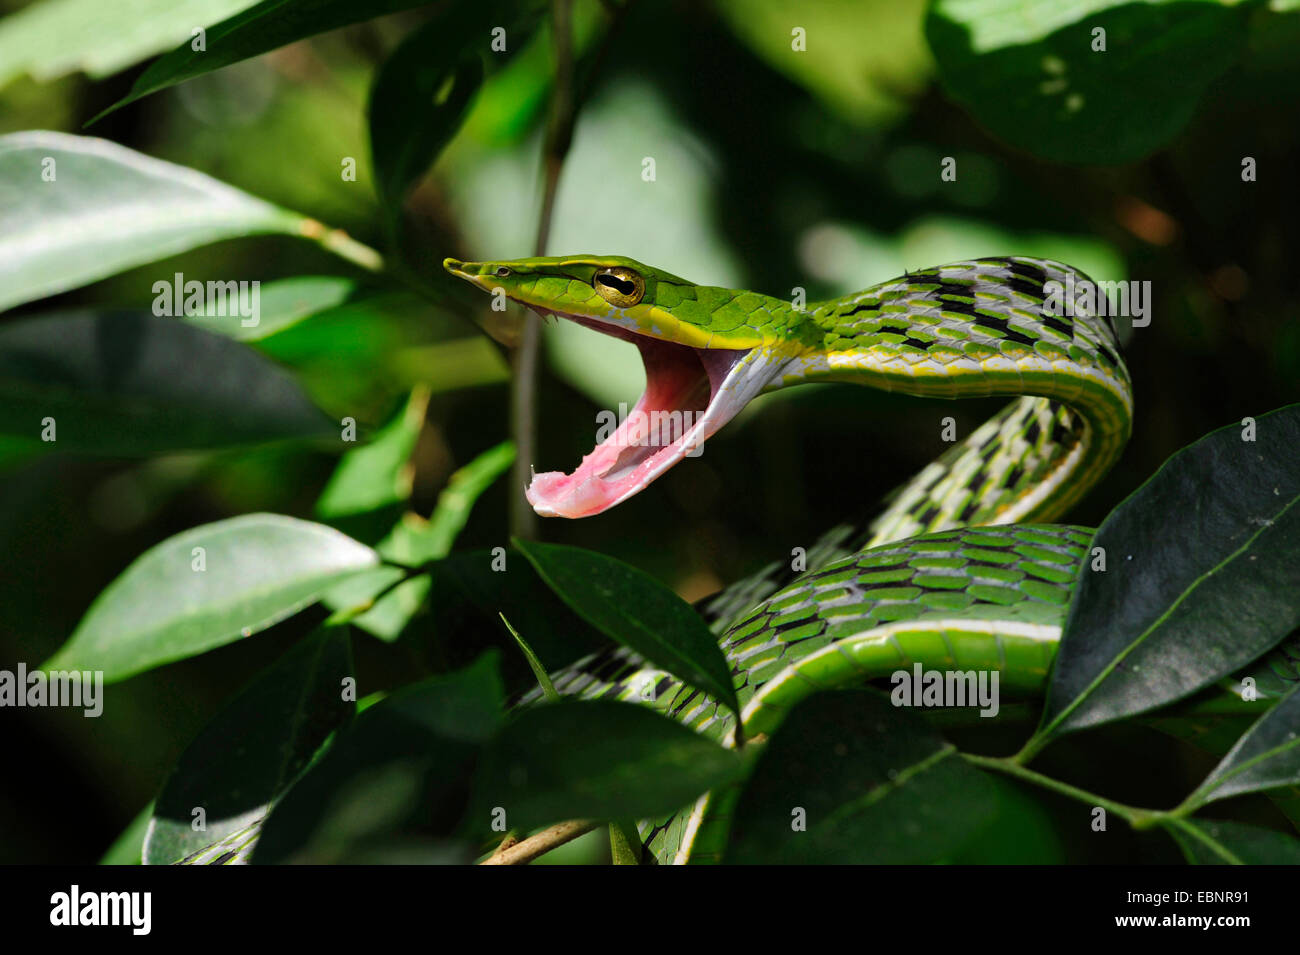 Longnose whipsnake, Green vine snake (Ahaetulla nasuta), threatening with mouth open, Sri Lanka, Sinharaja Forest National Park Stock Photo